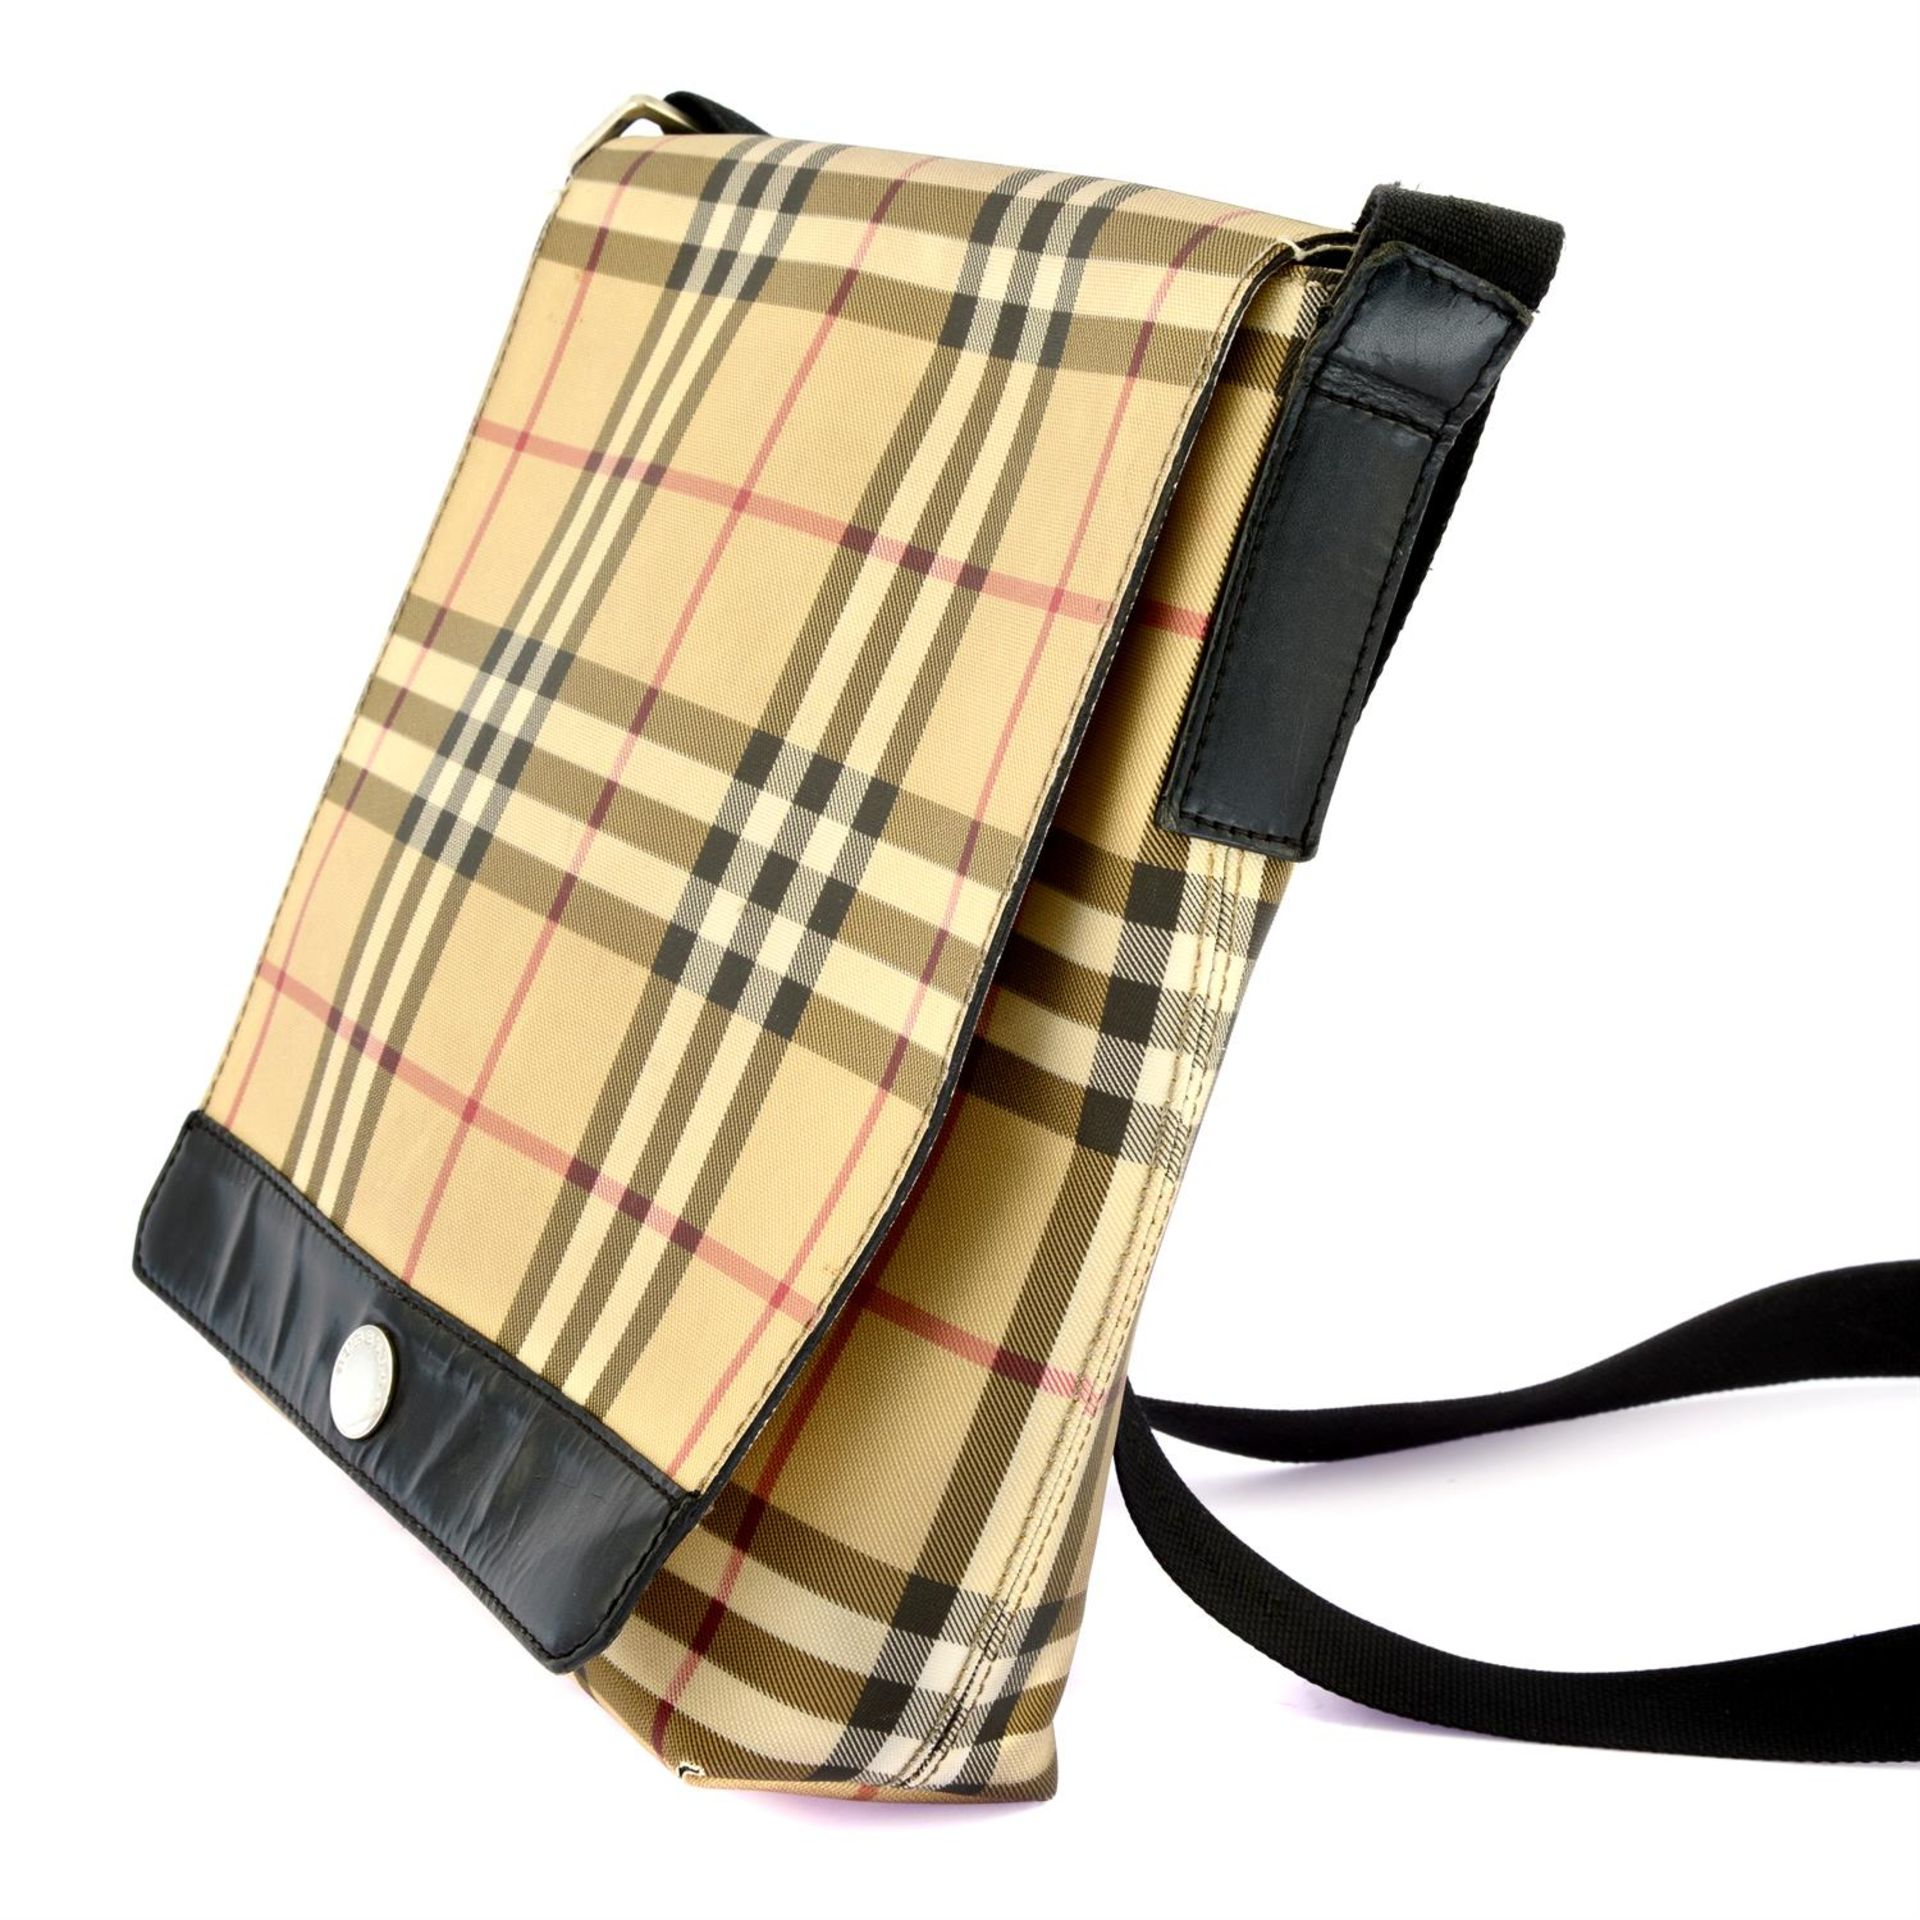 BURBERRY - a canvas house check shoulder bag. - Image 3 of 5